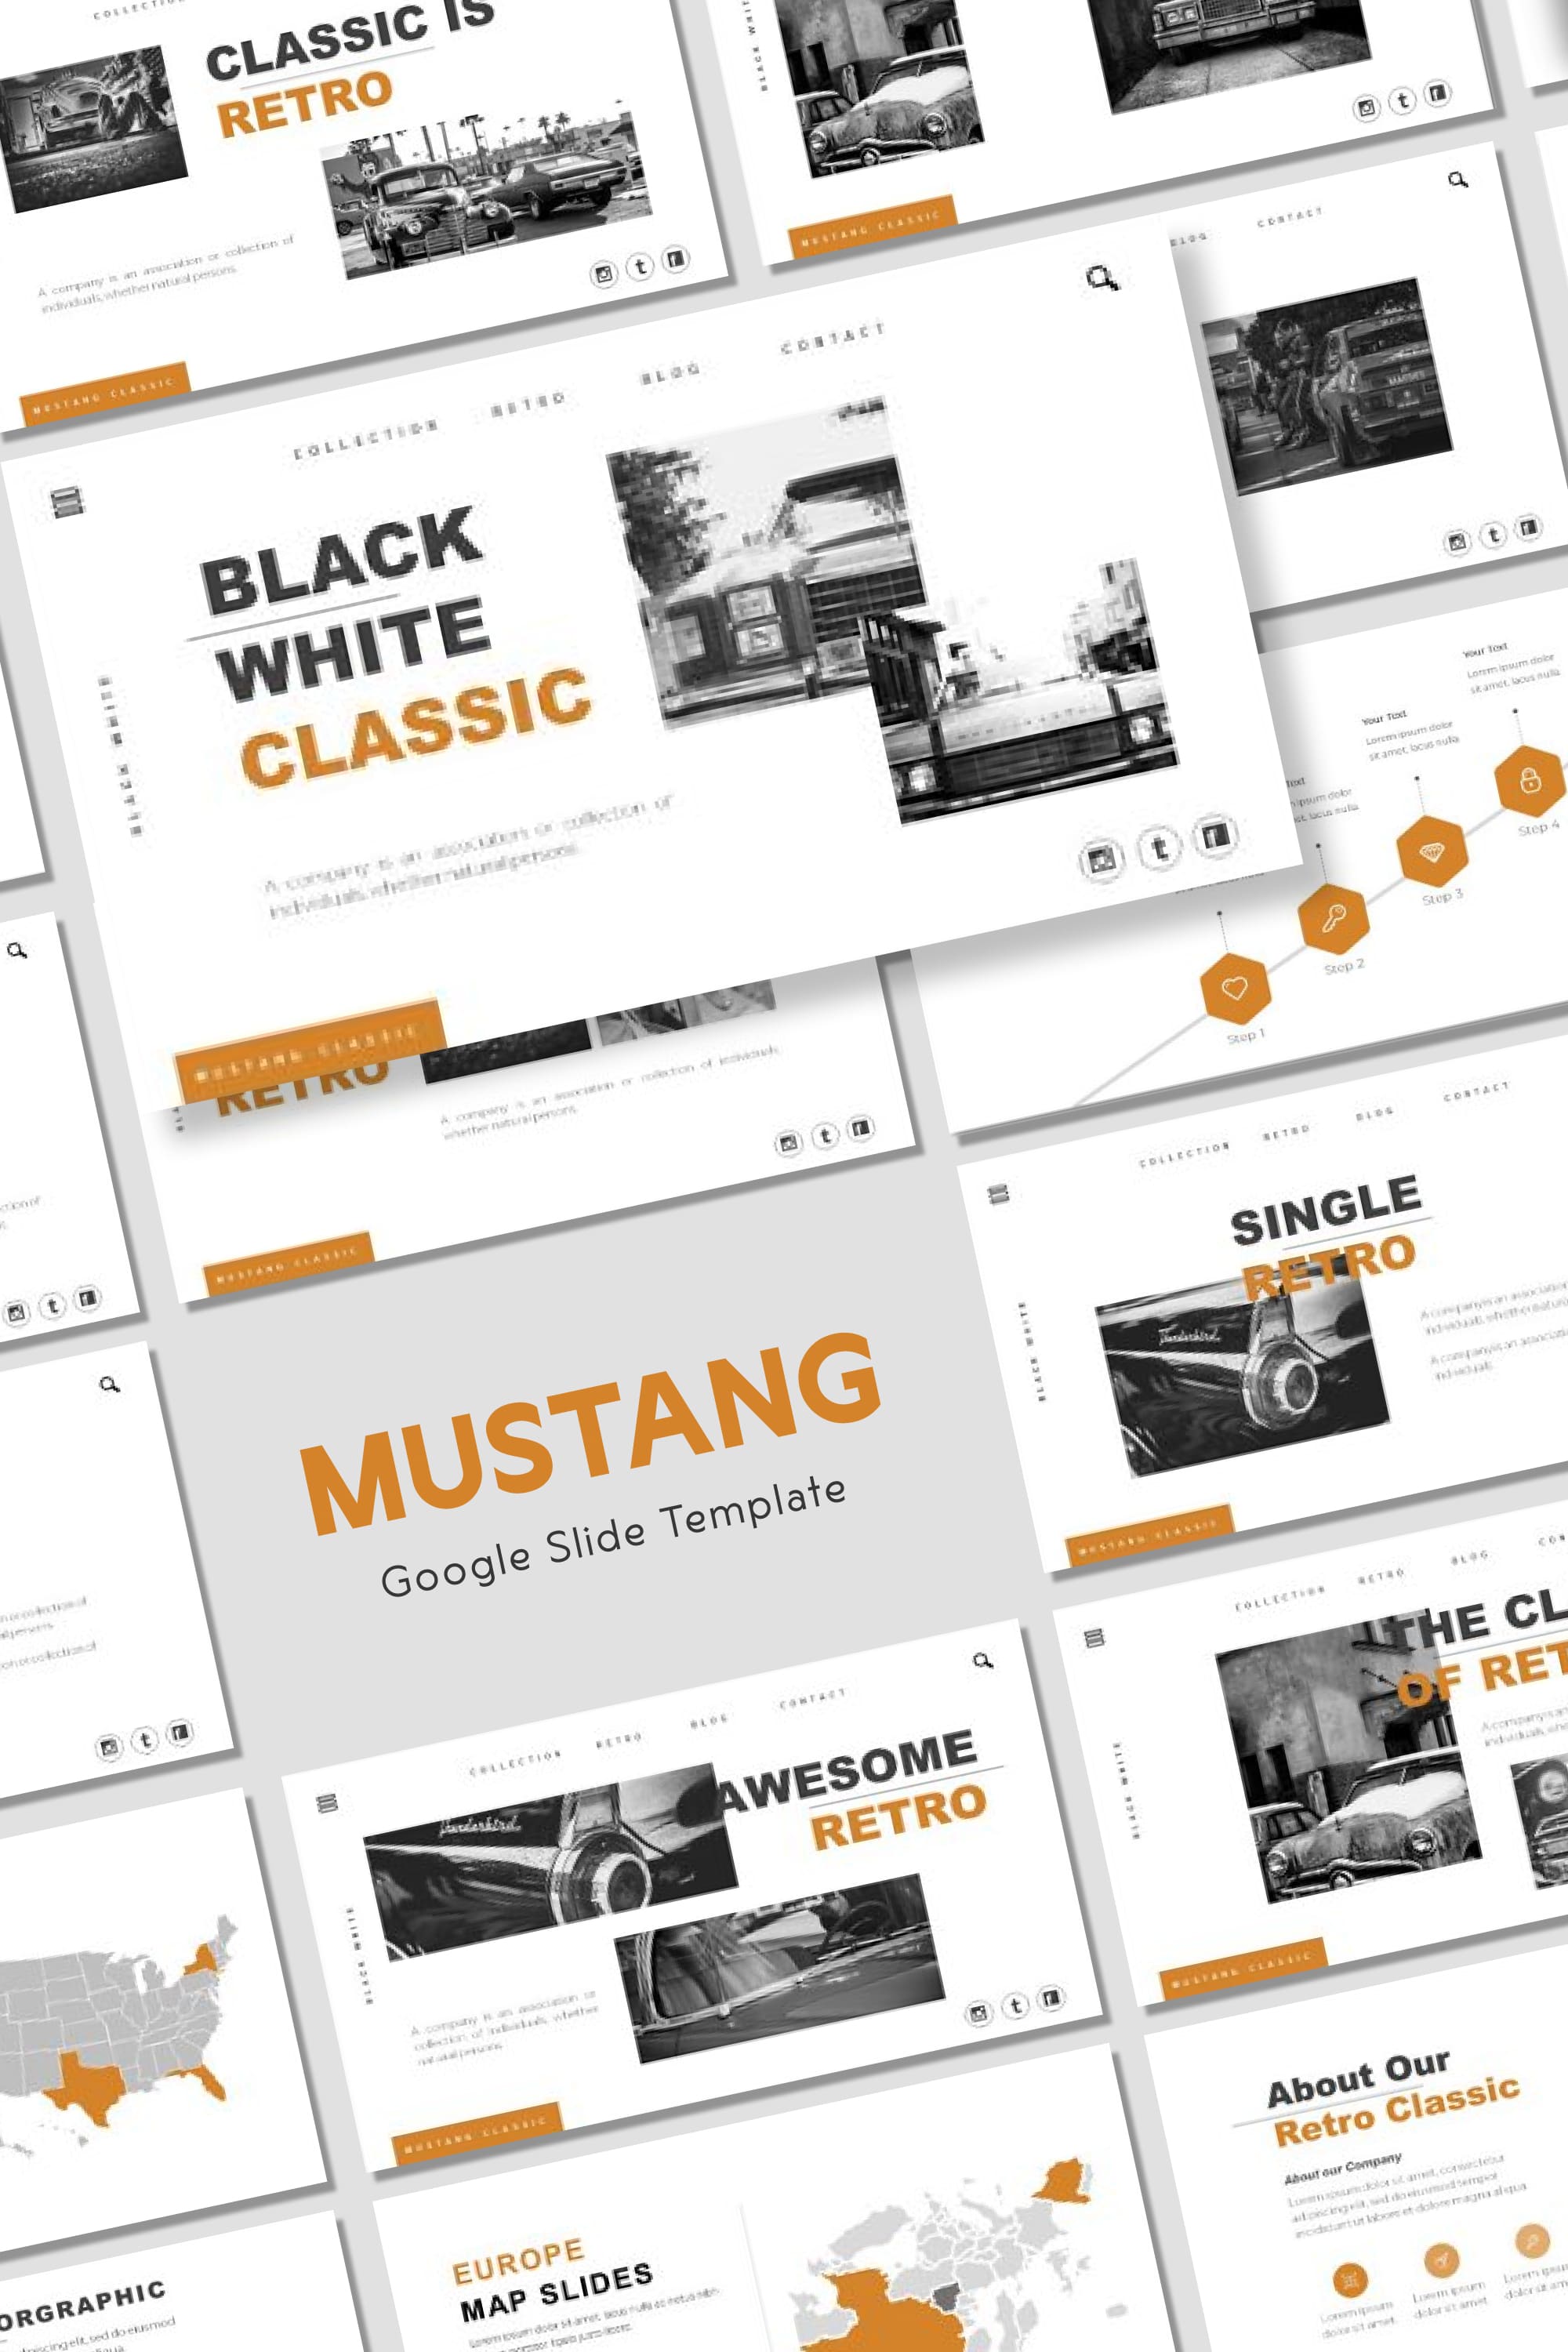 Mustang google slide template - pinterest image preview.